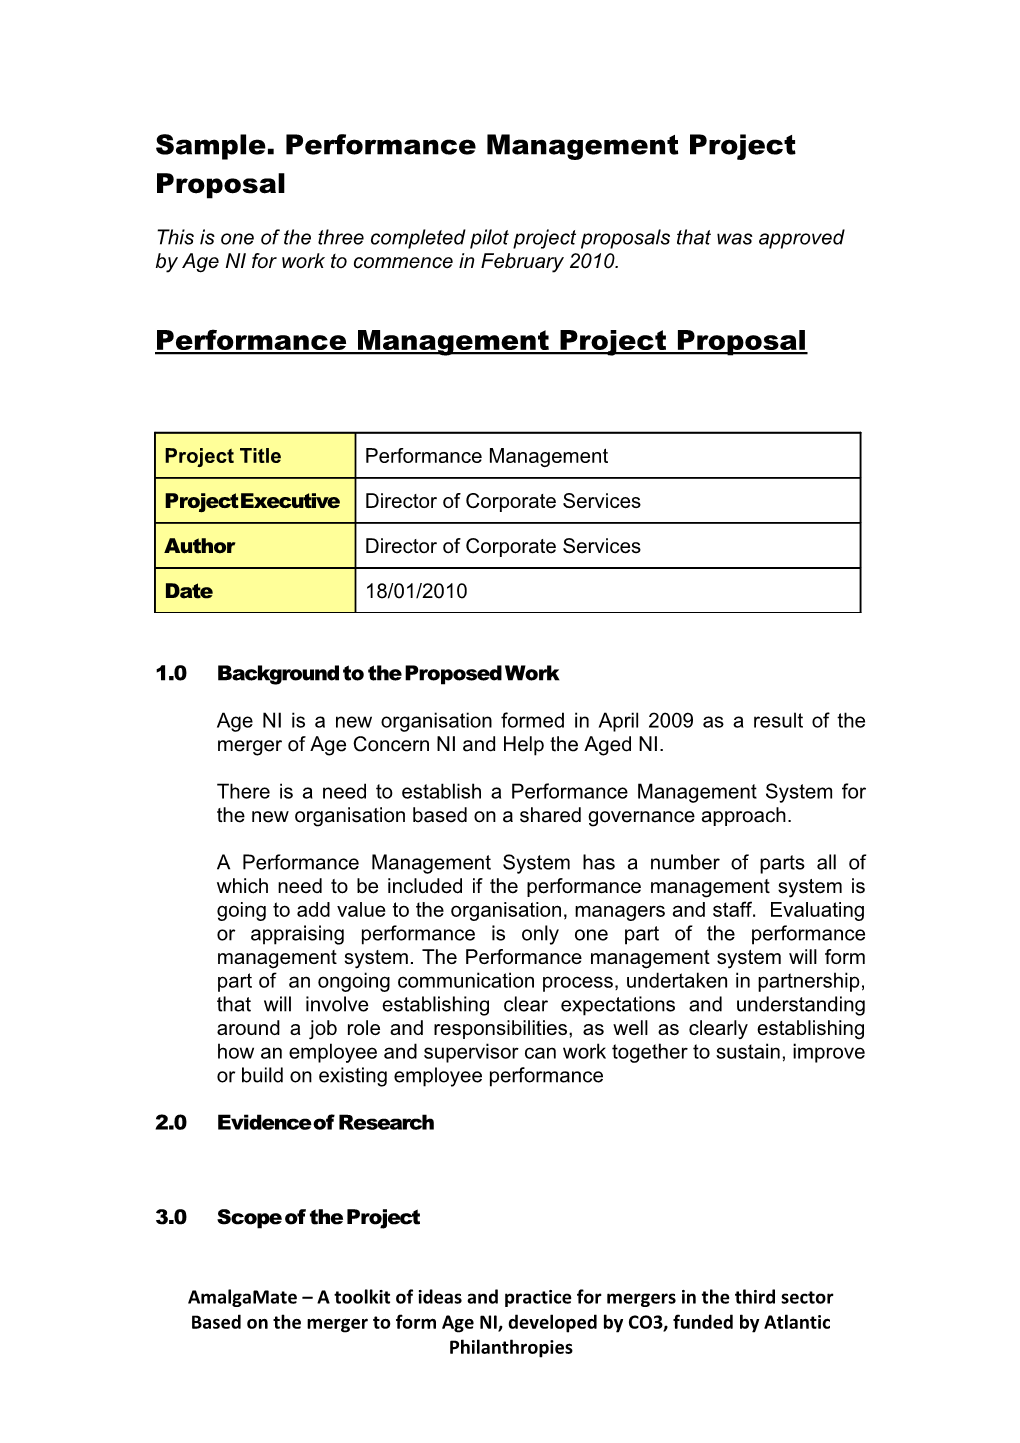 Sample: Performance Management Project Proposal